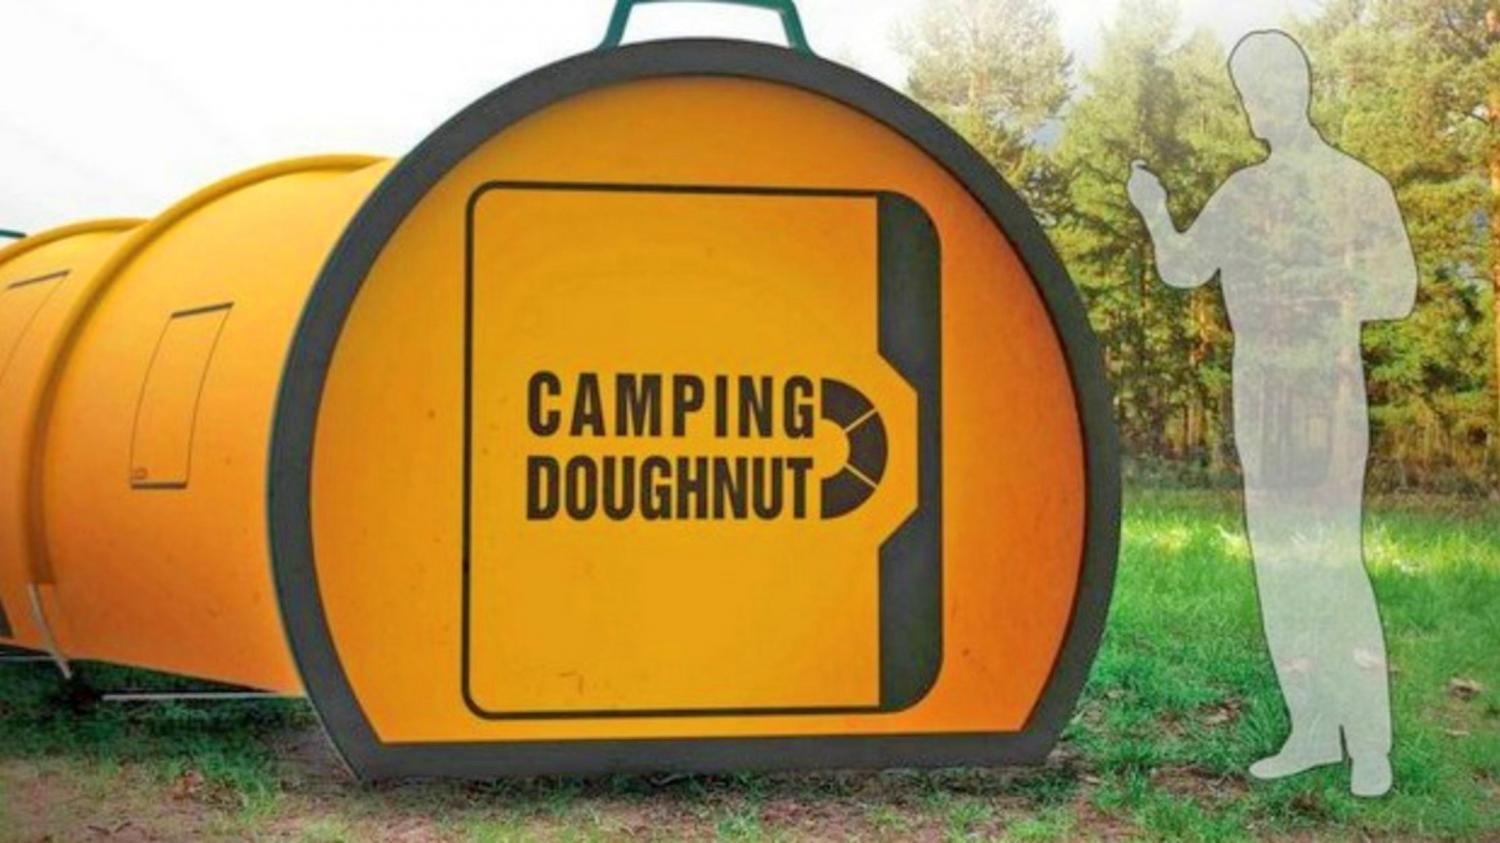 Donut shaped camping tent - Camping Doughnut Tent